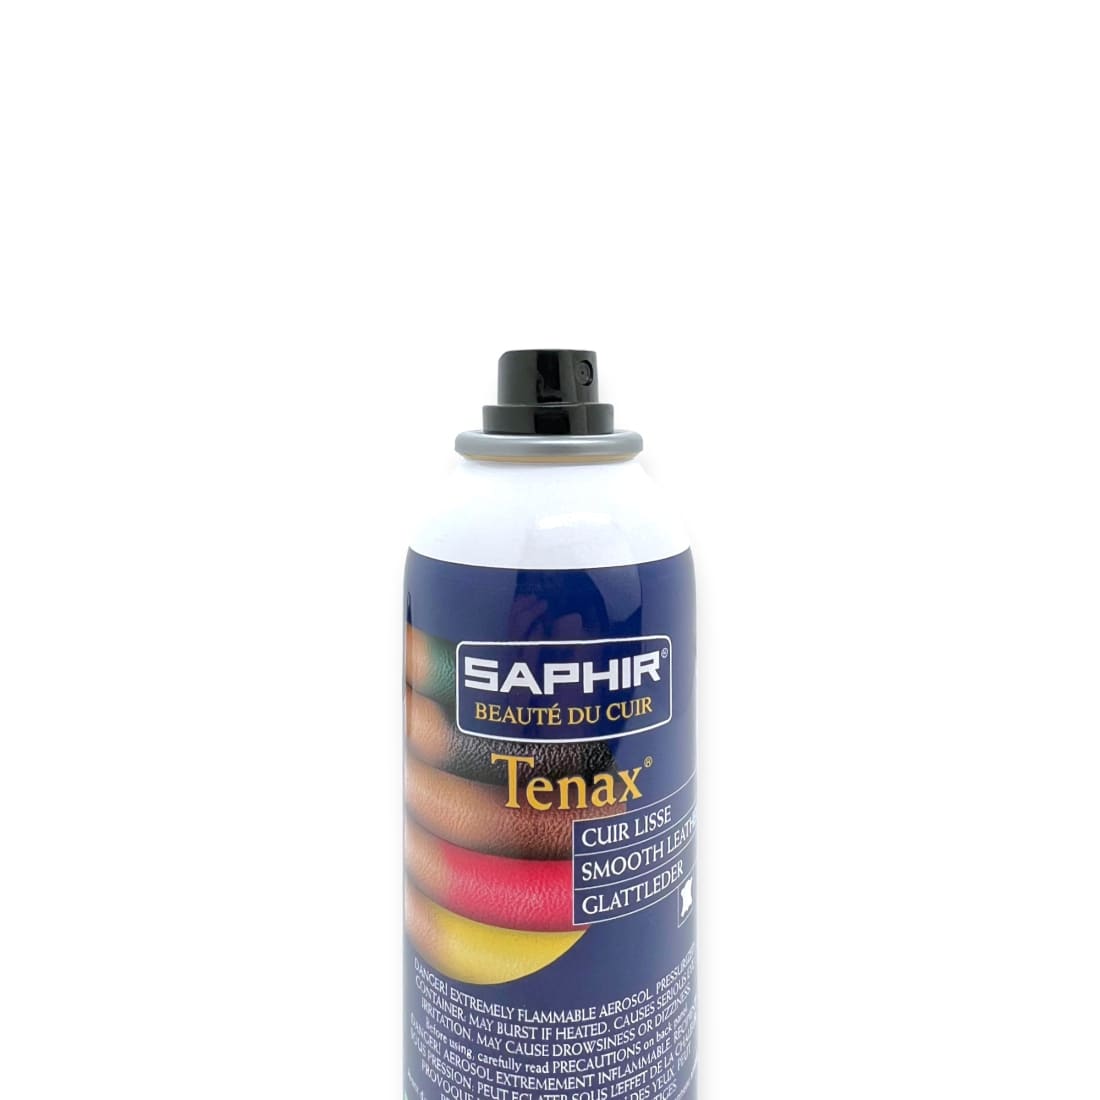 Spray Tenax Teinture Noisette - Saphir - 150 ml -